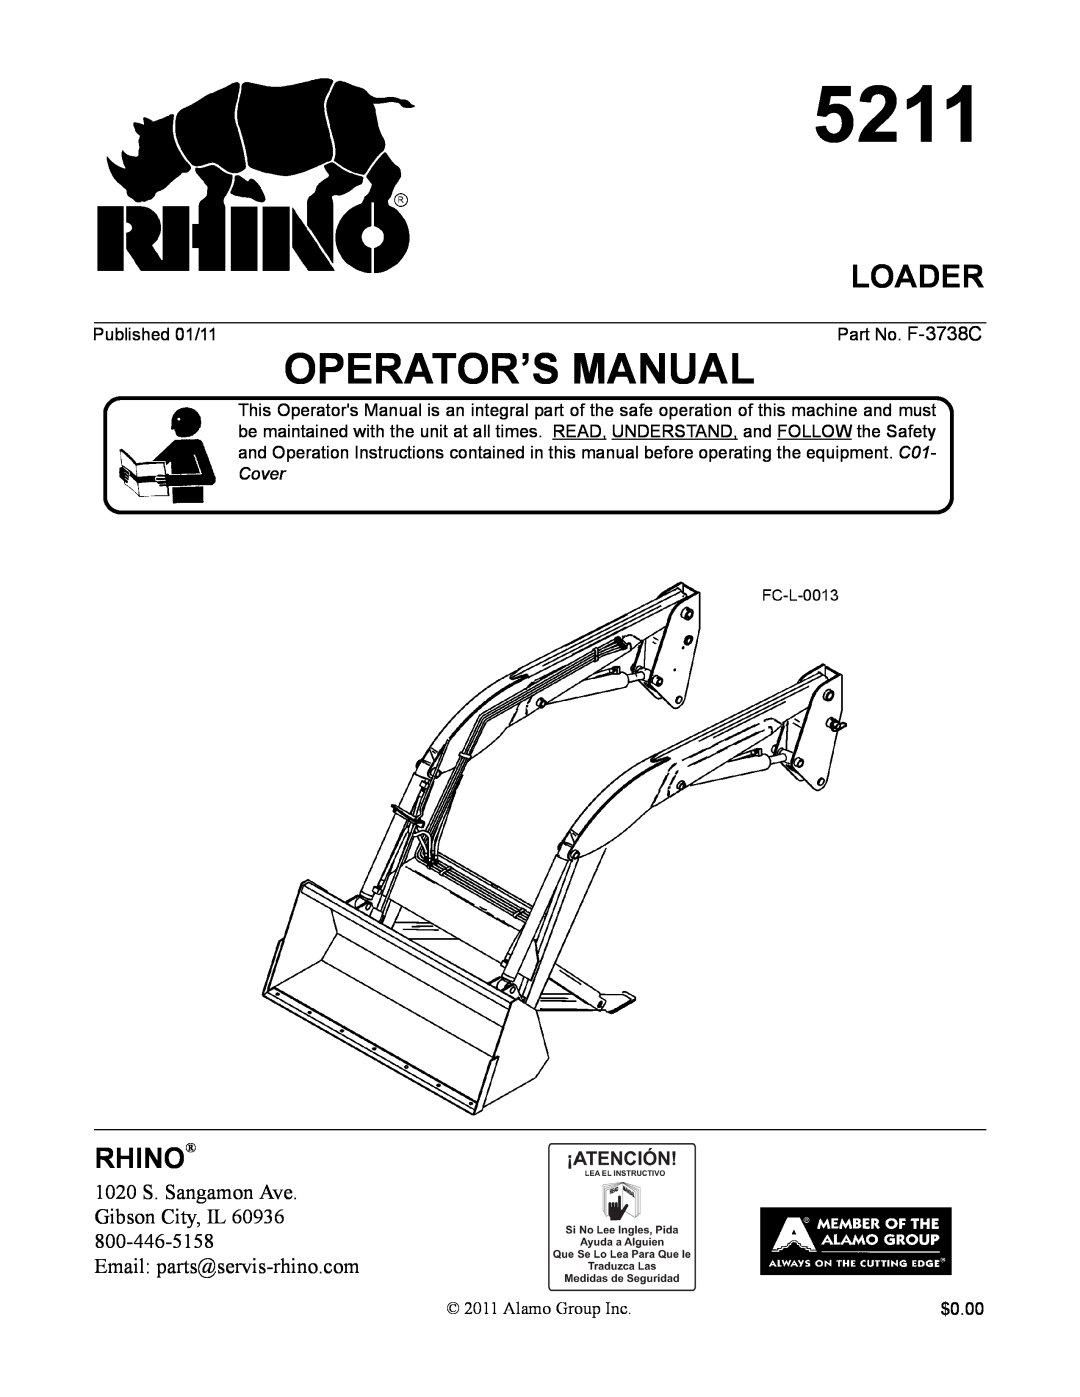 Servis-Rhino 5211 manual Loader, Operator’S Manual, Rhino, 1020 S. Sangamon Ave Gibson City, IL 60936 